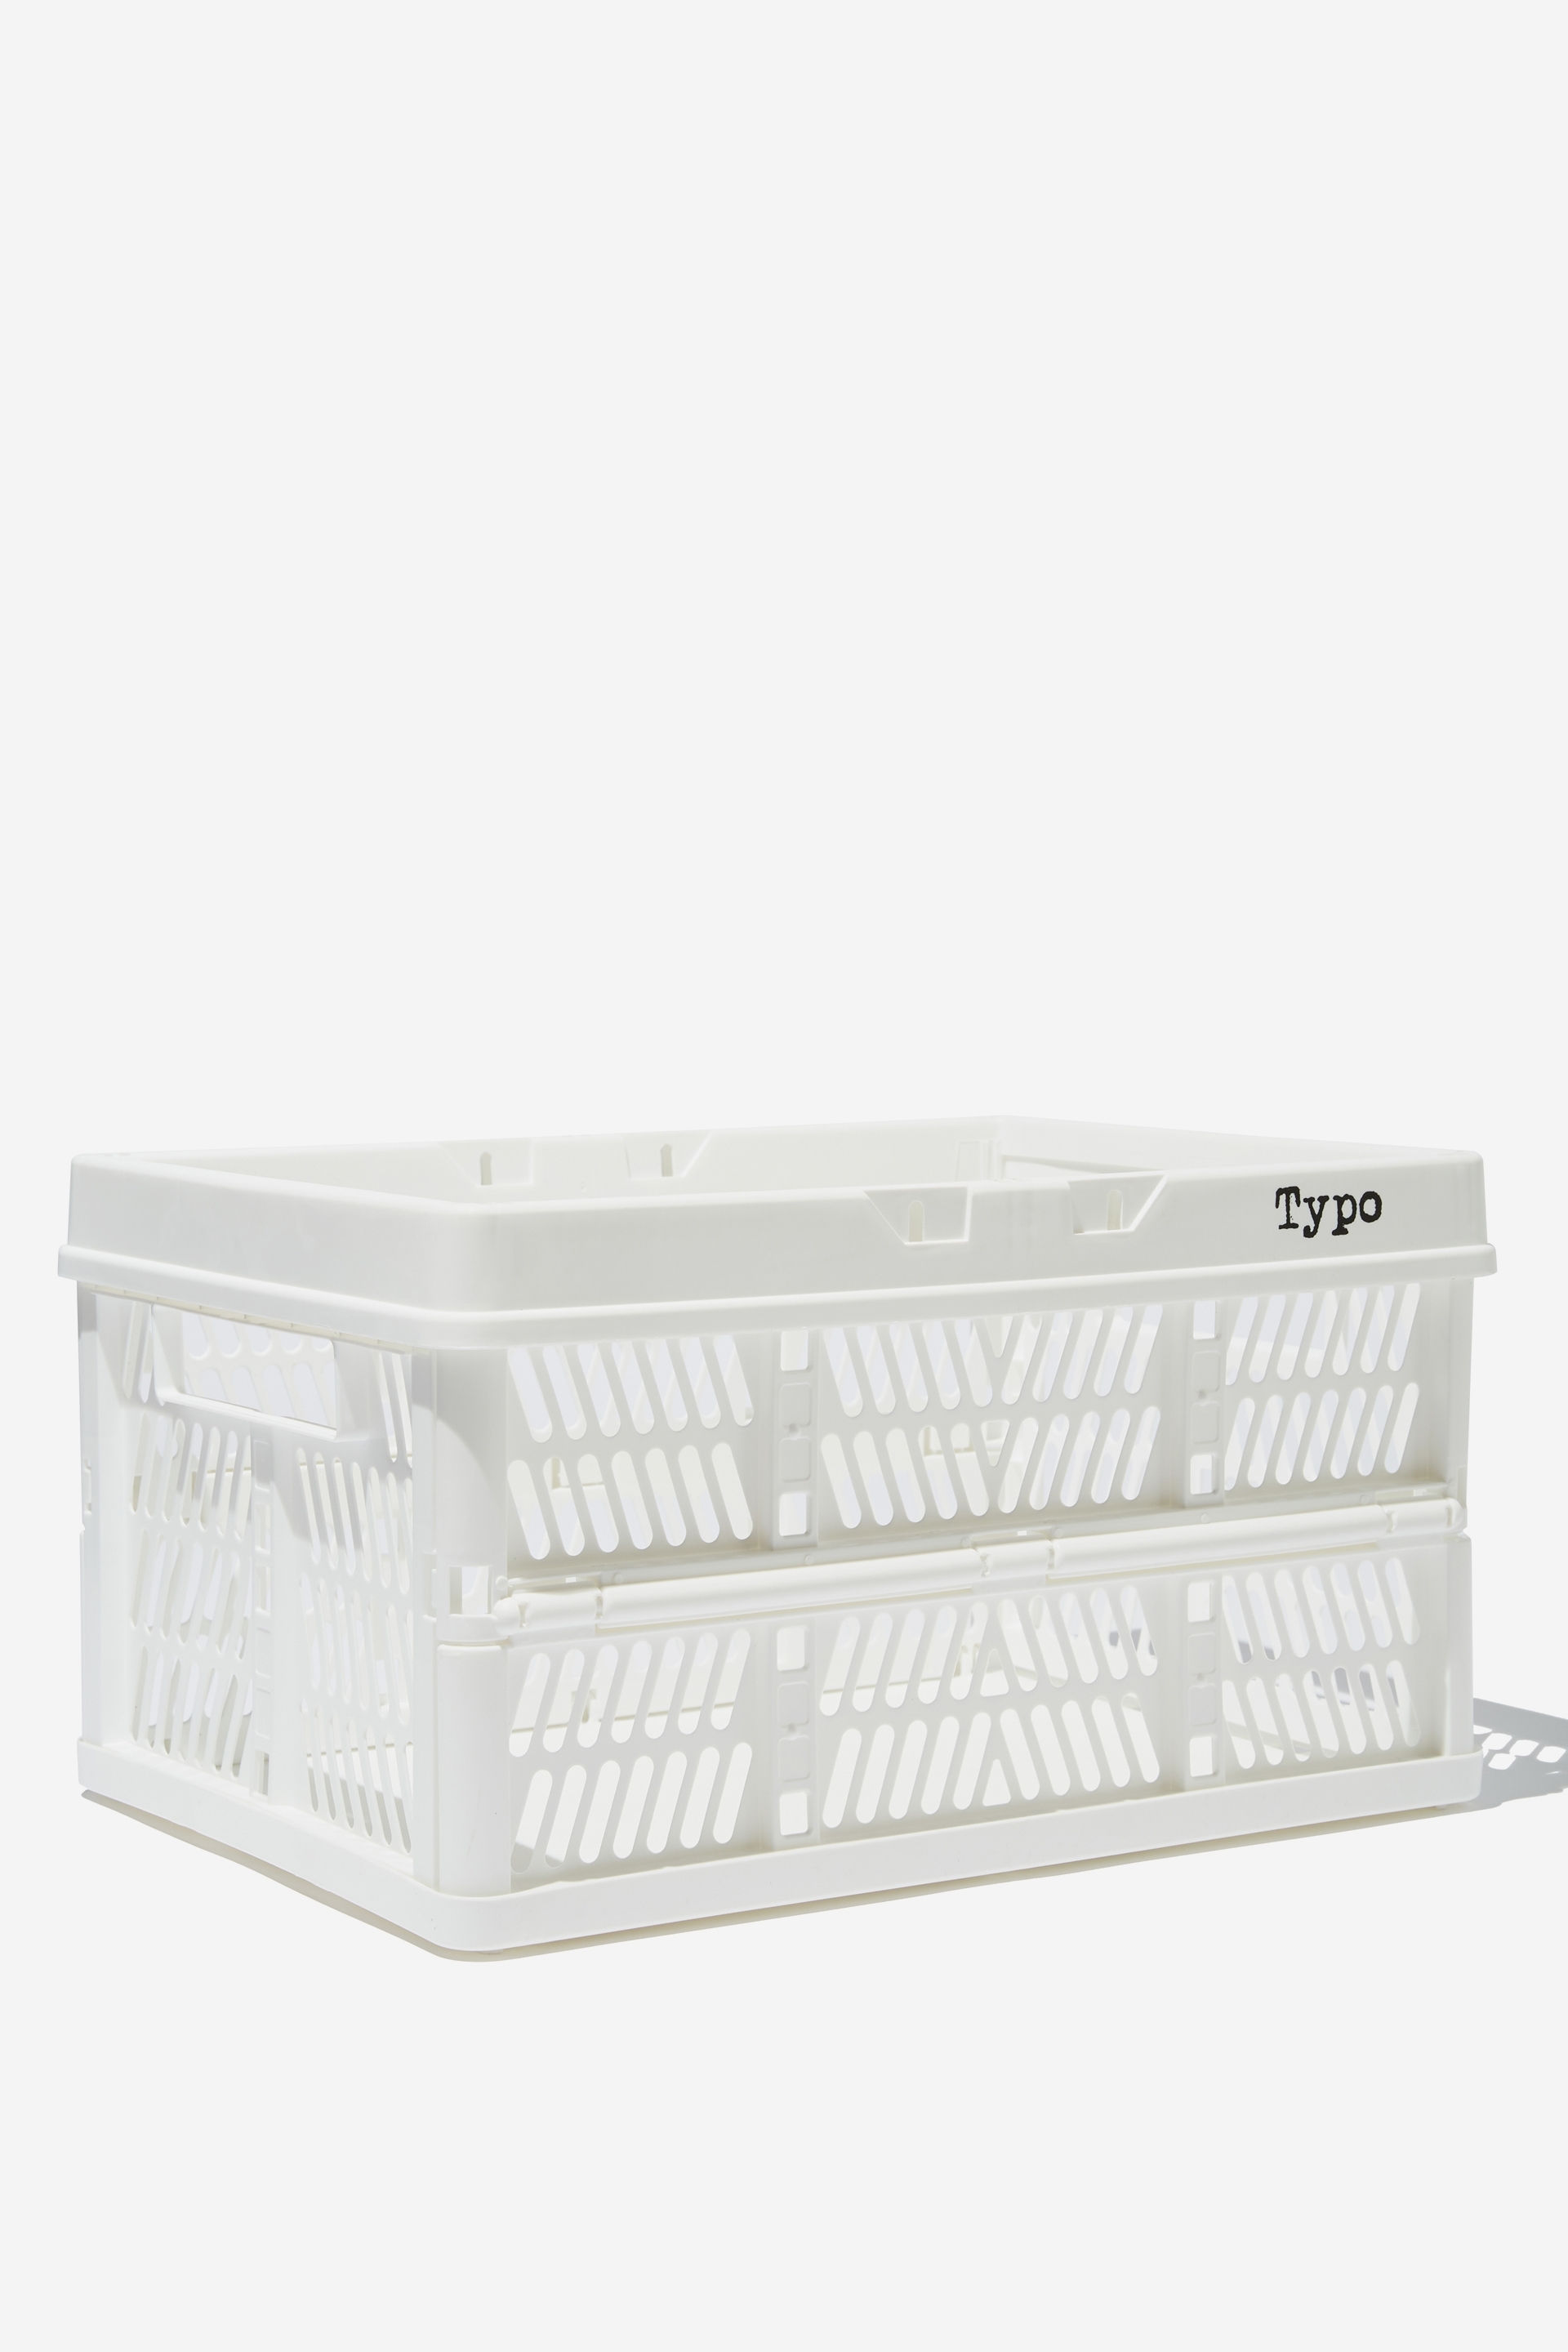 Typo - Large Foldable Storage Crate - White